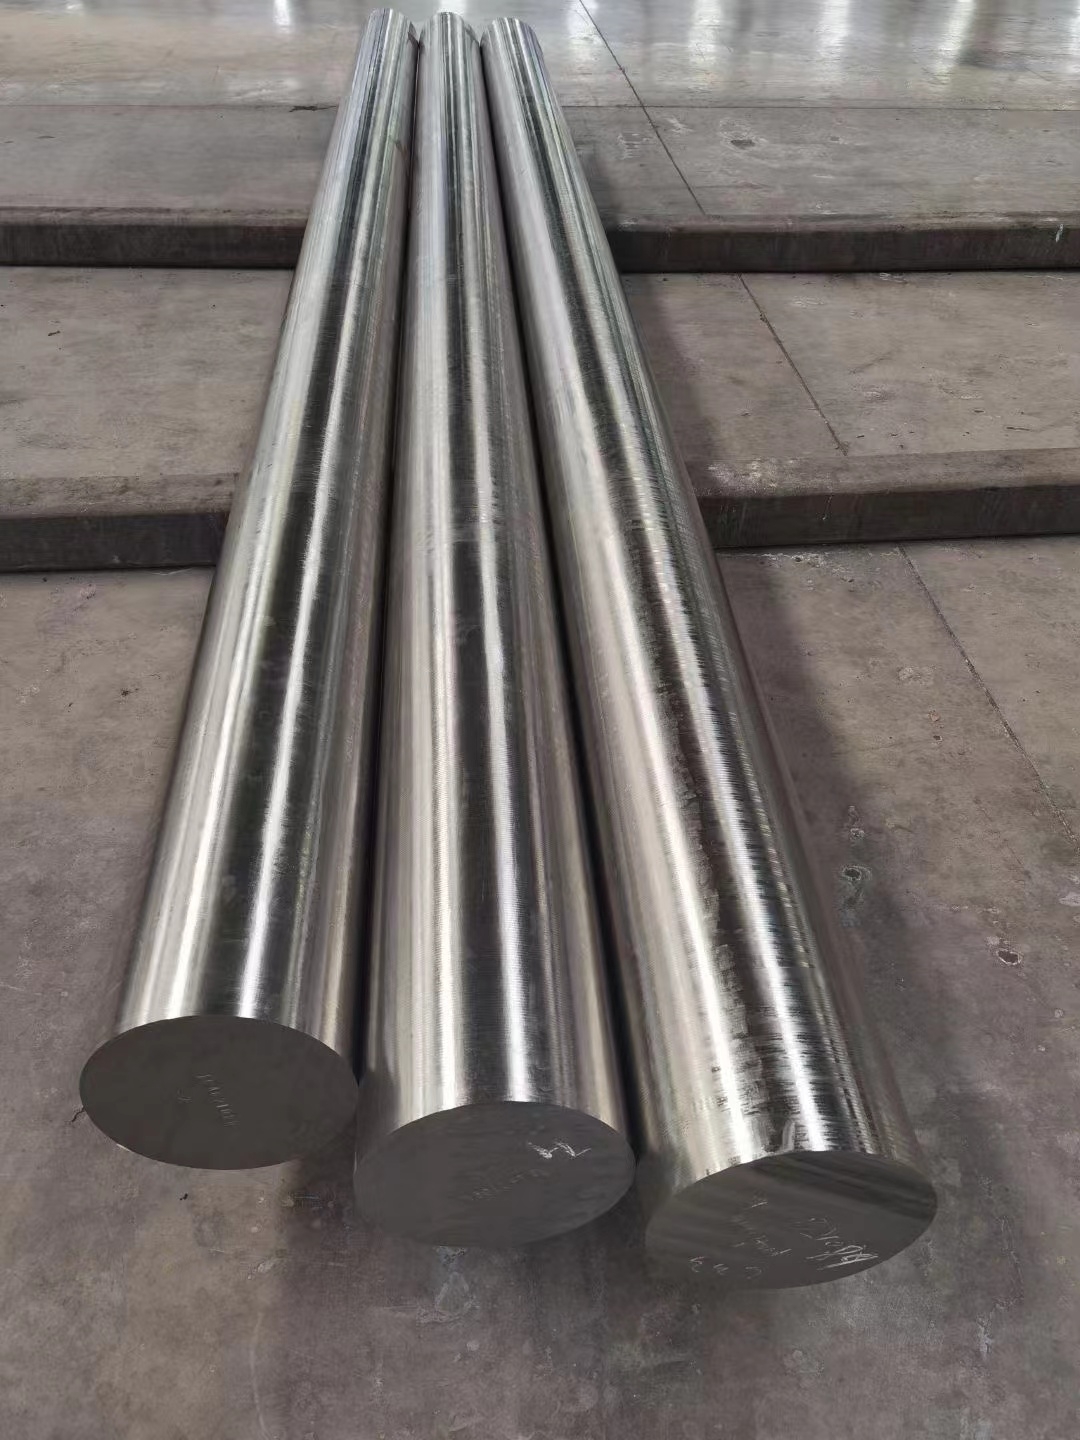 20NiCrMo13-4 1.6660 Case Hardening Steels